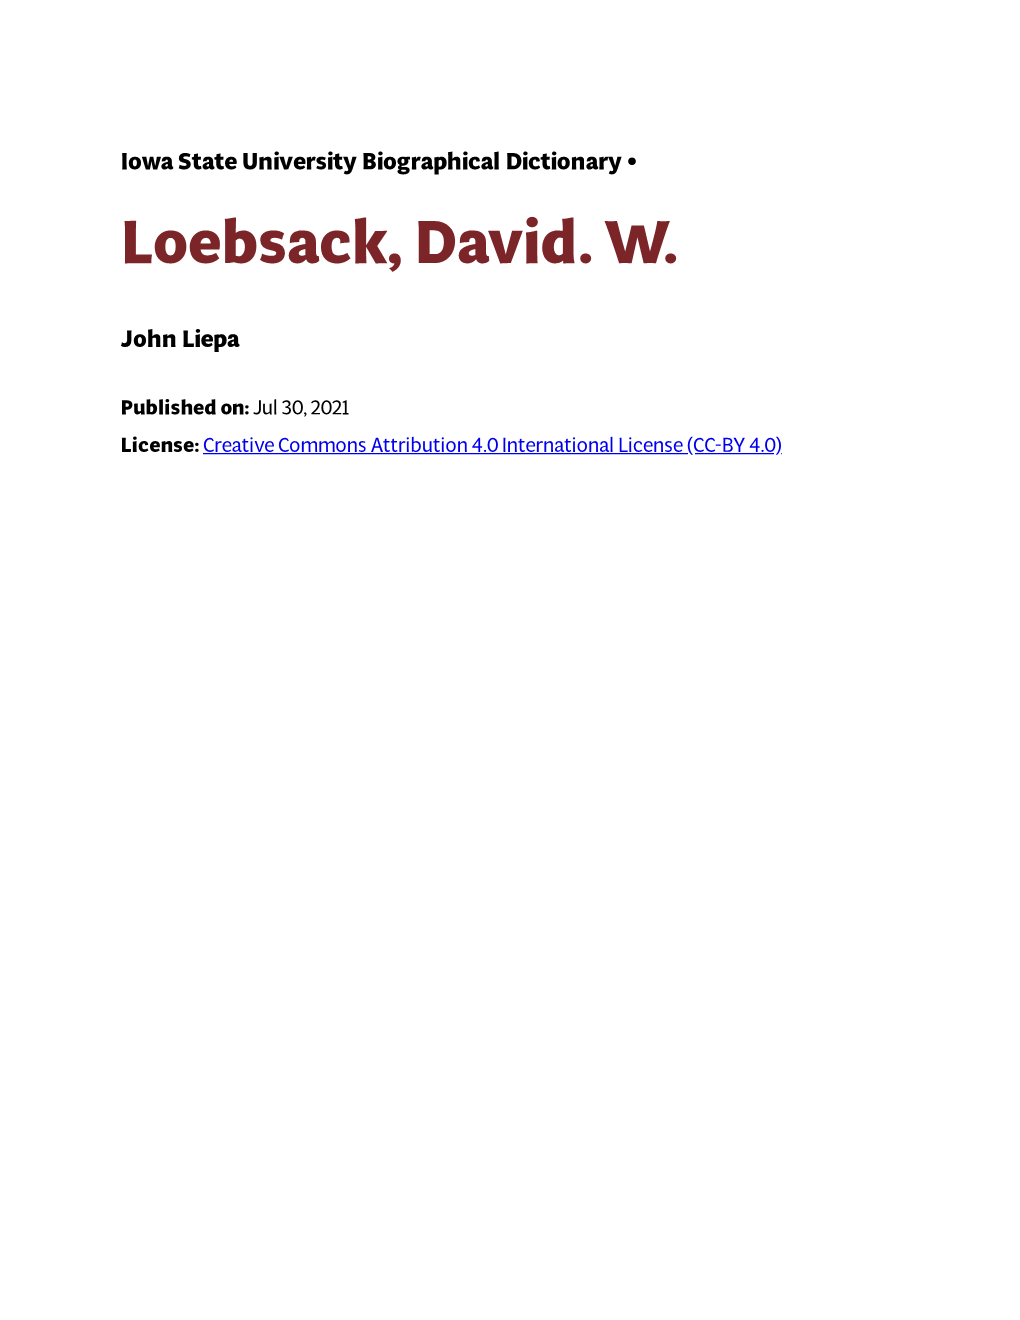 Loebsack, David. W